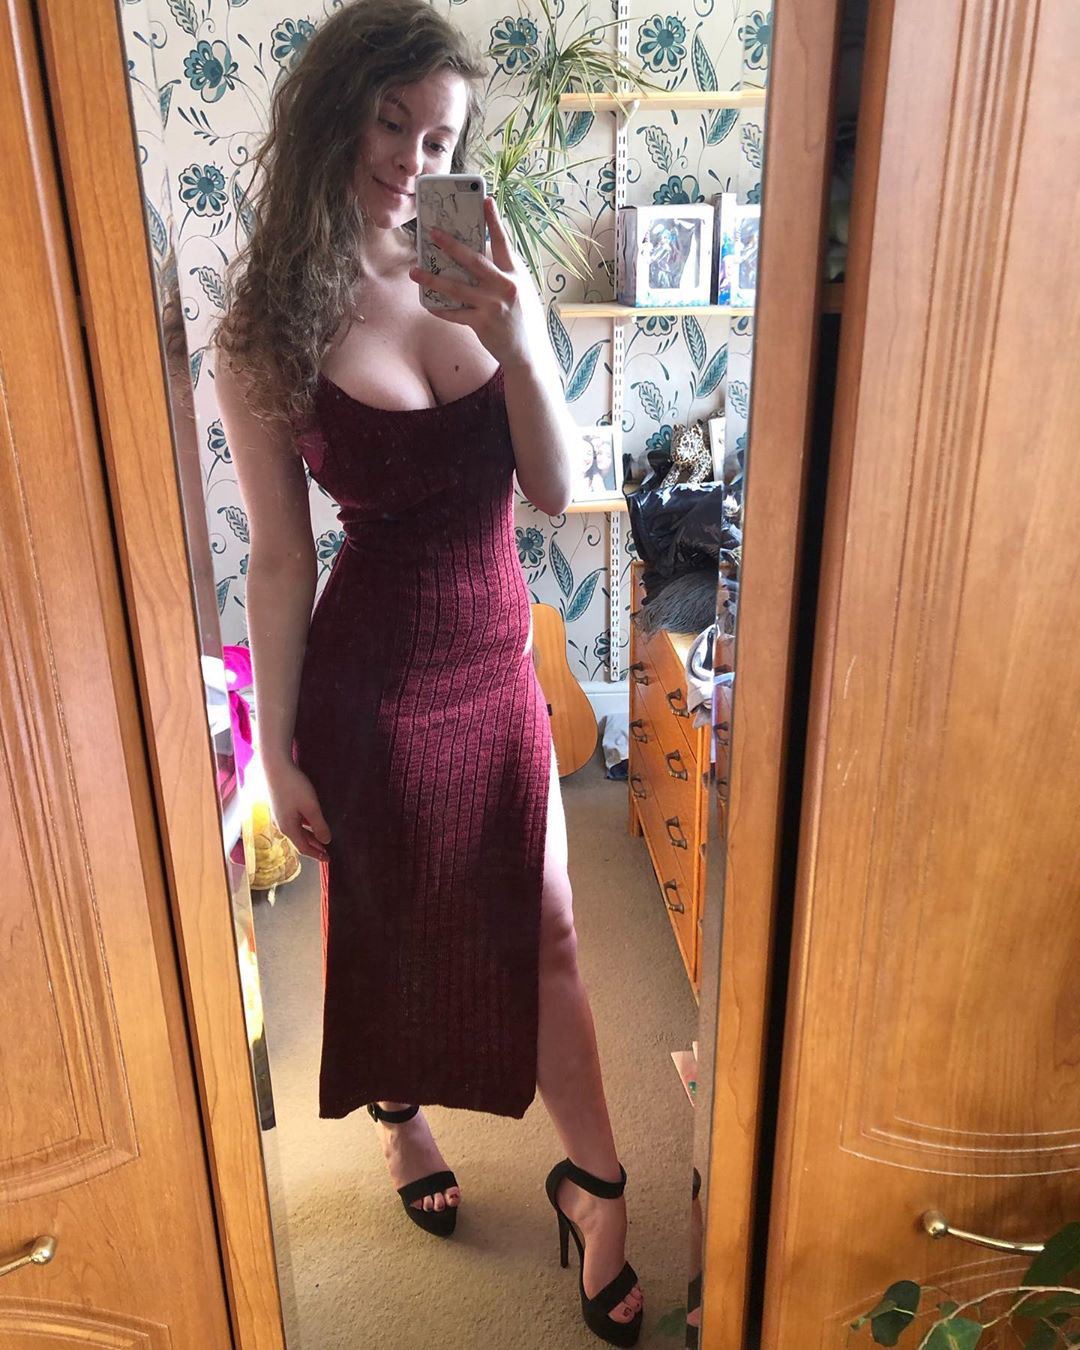 galleries pussy selfie tight dress